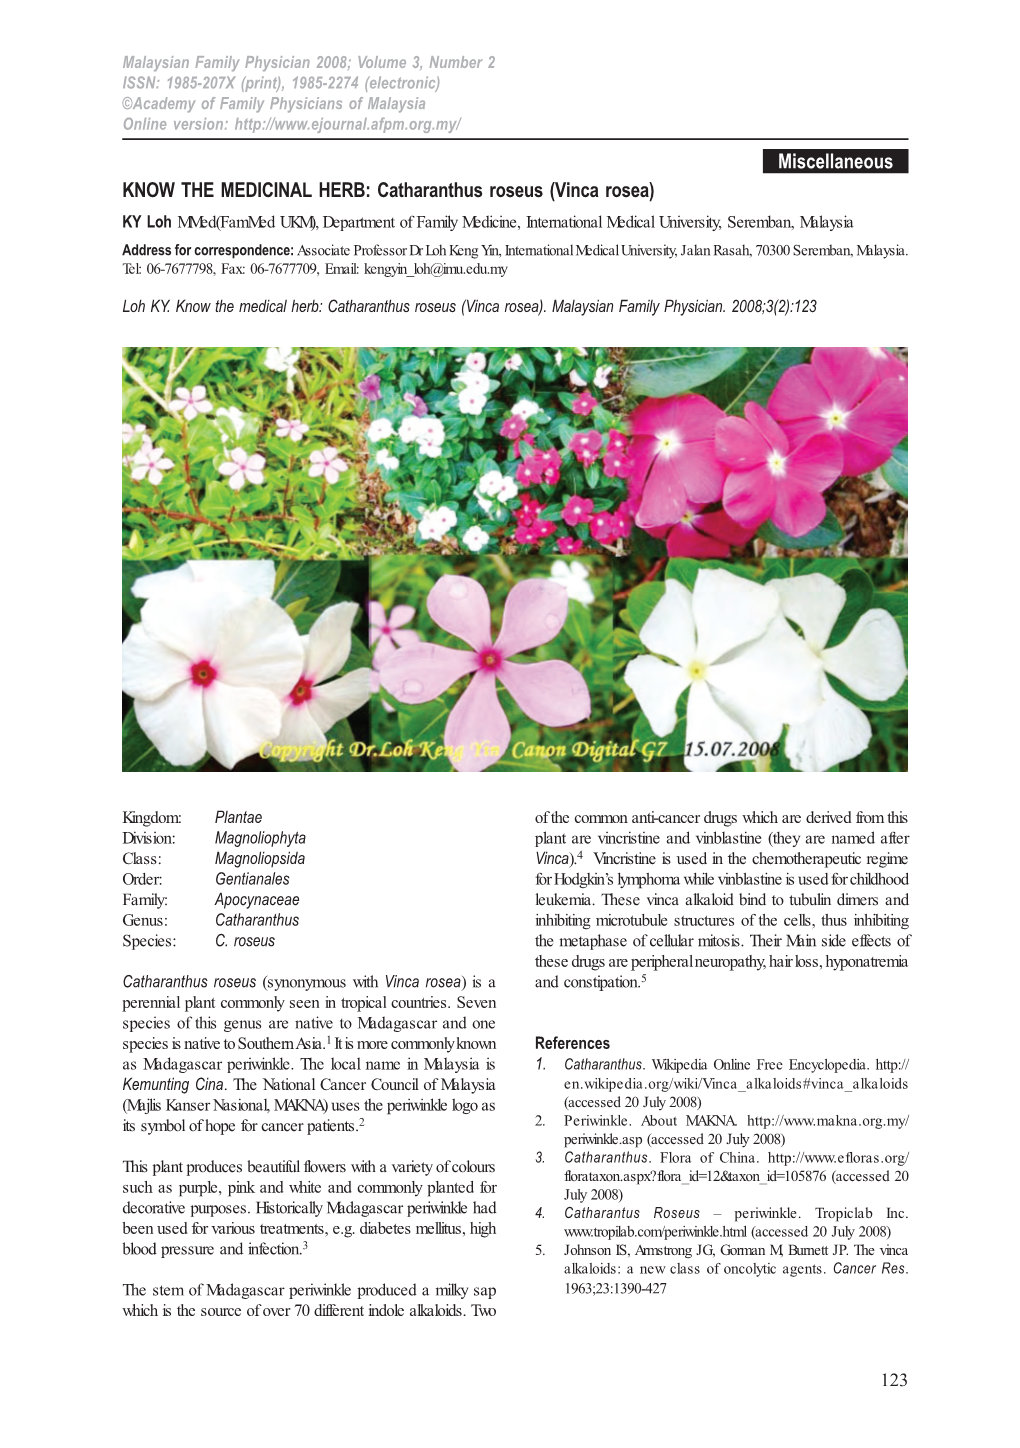 KNOW the MEDICINAL HERB: Catharanthus Roseus (Vinca Rosea)